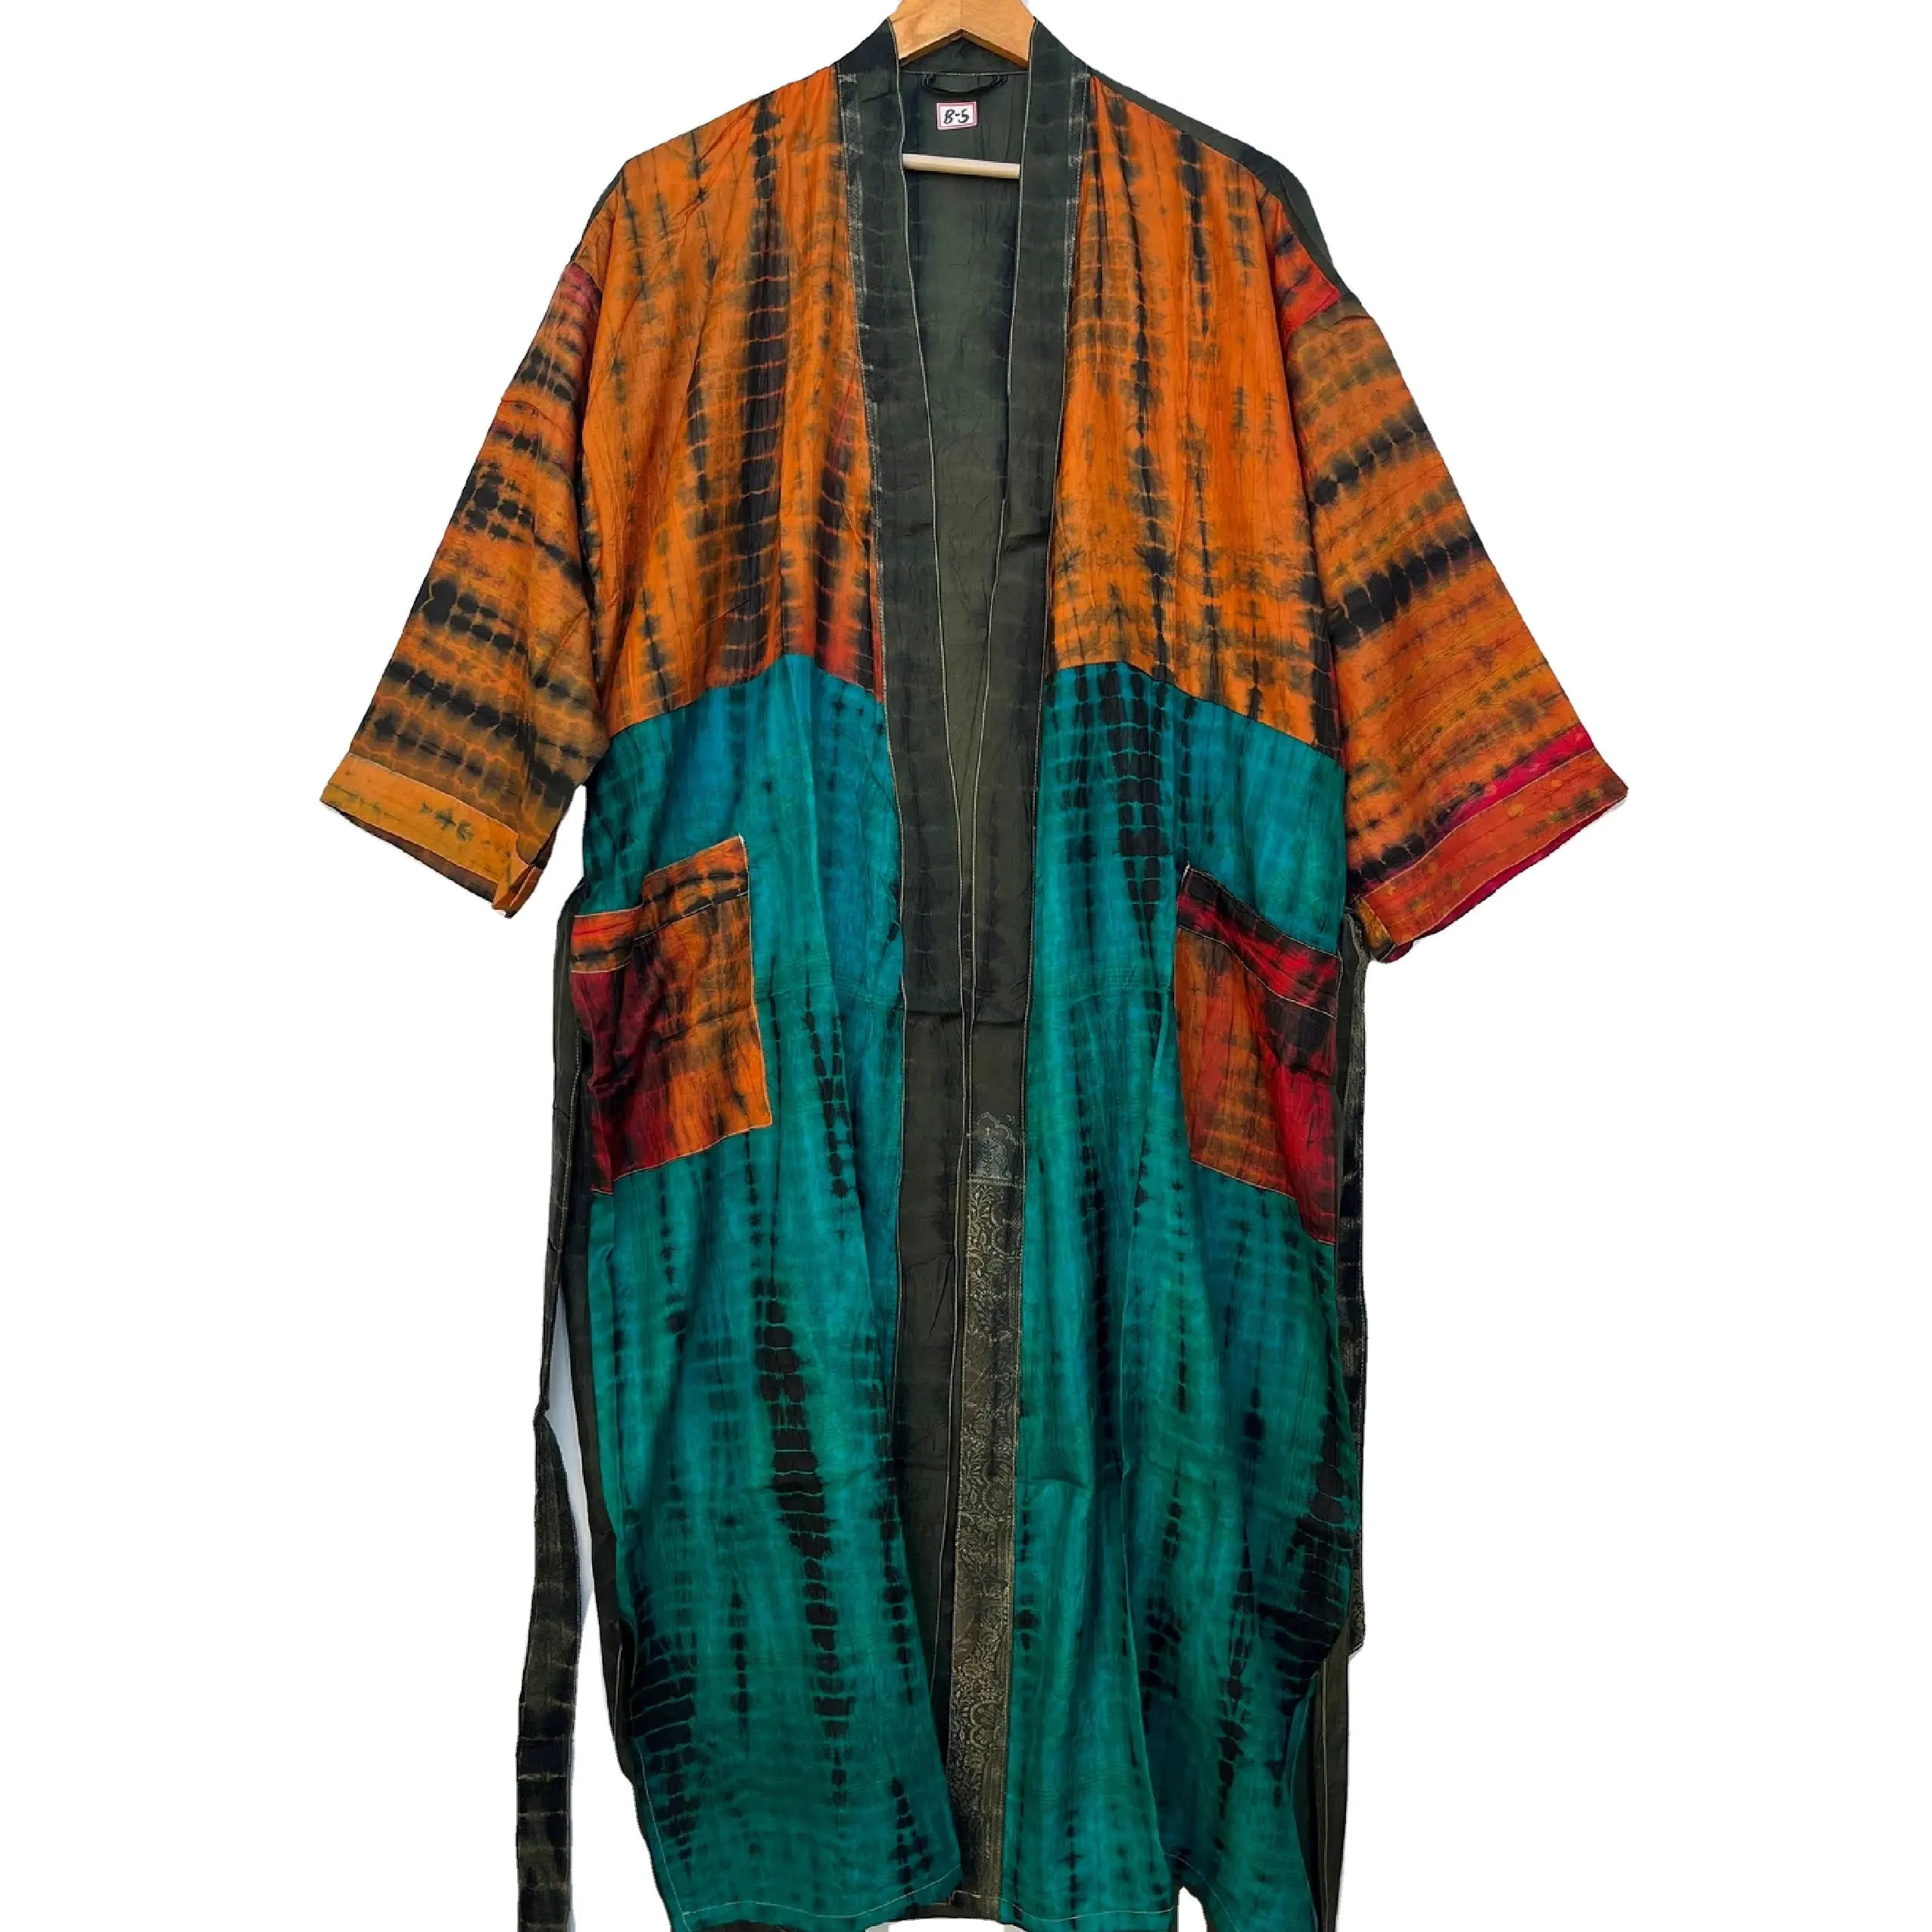 Beautiful Handmade Tie Dye Silk Sari Robe Indian Vintage Kimono Summer Wear Dress Bridal Dressing Gown